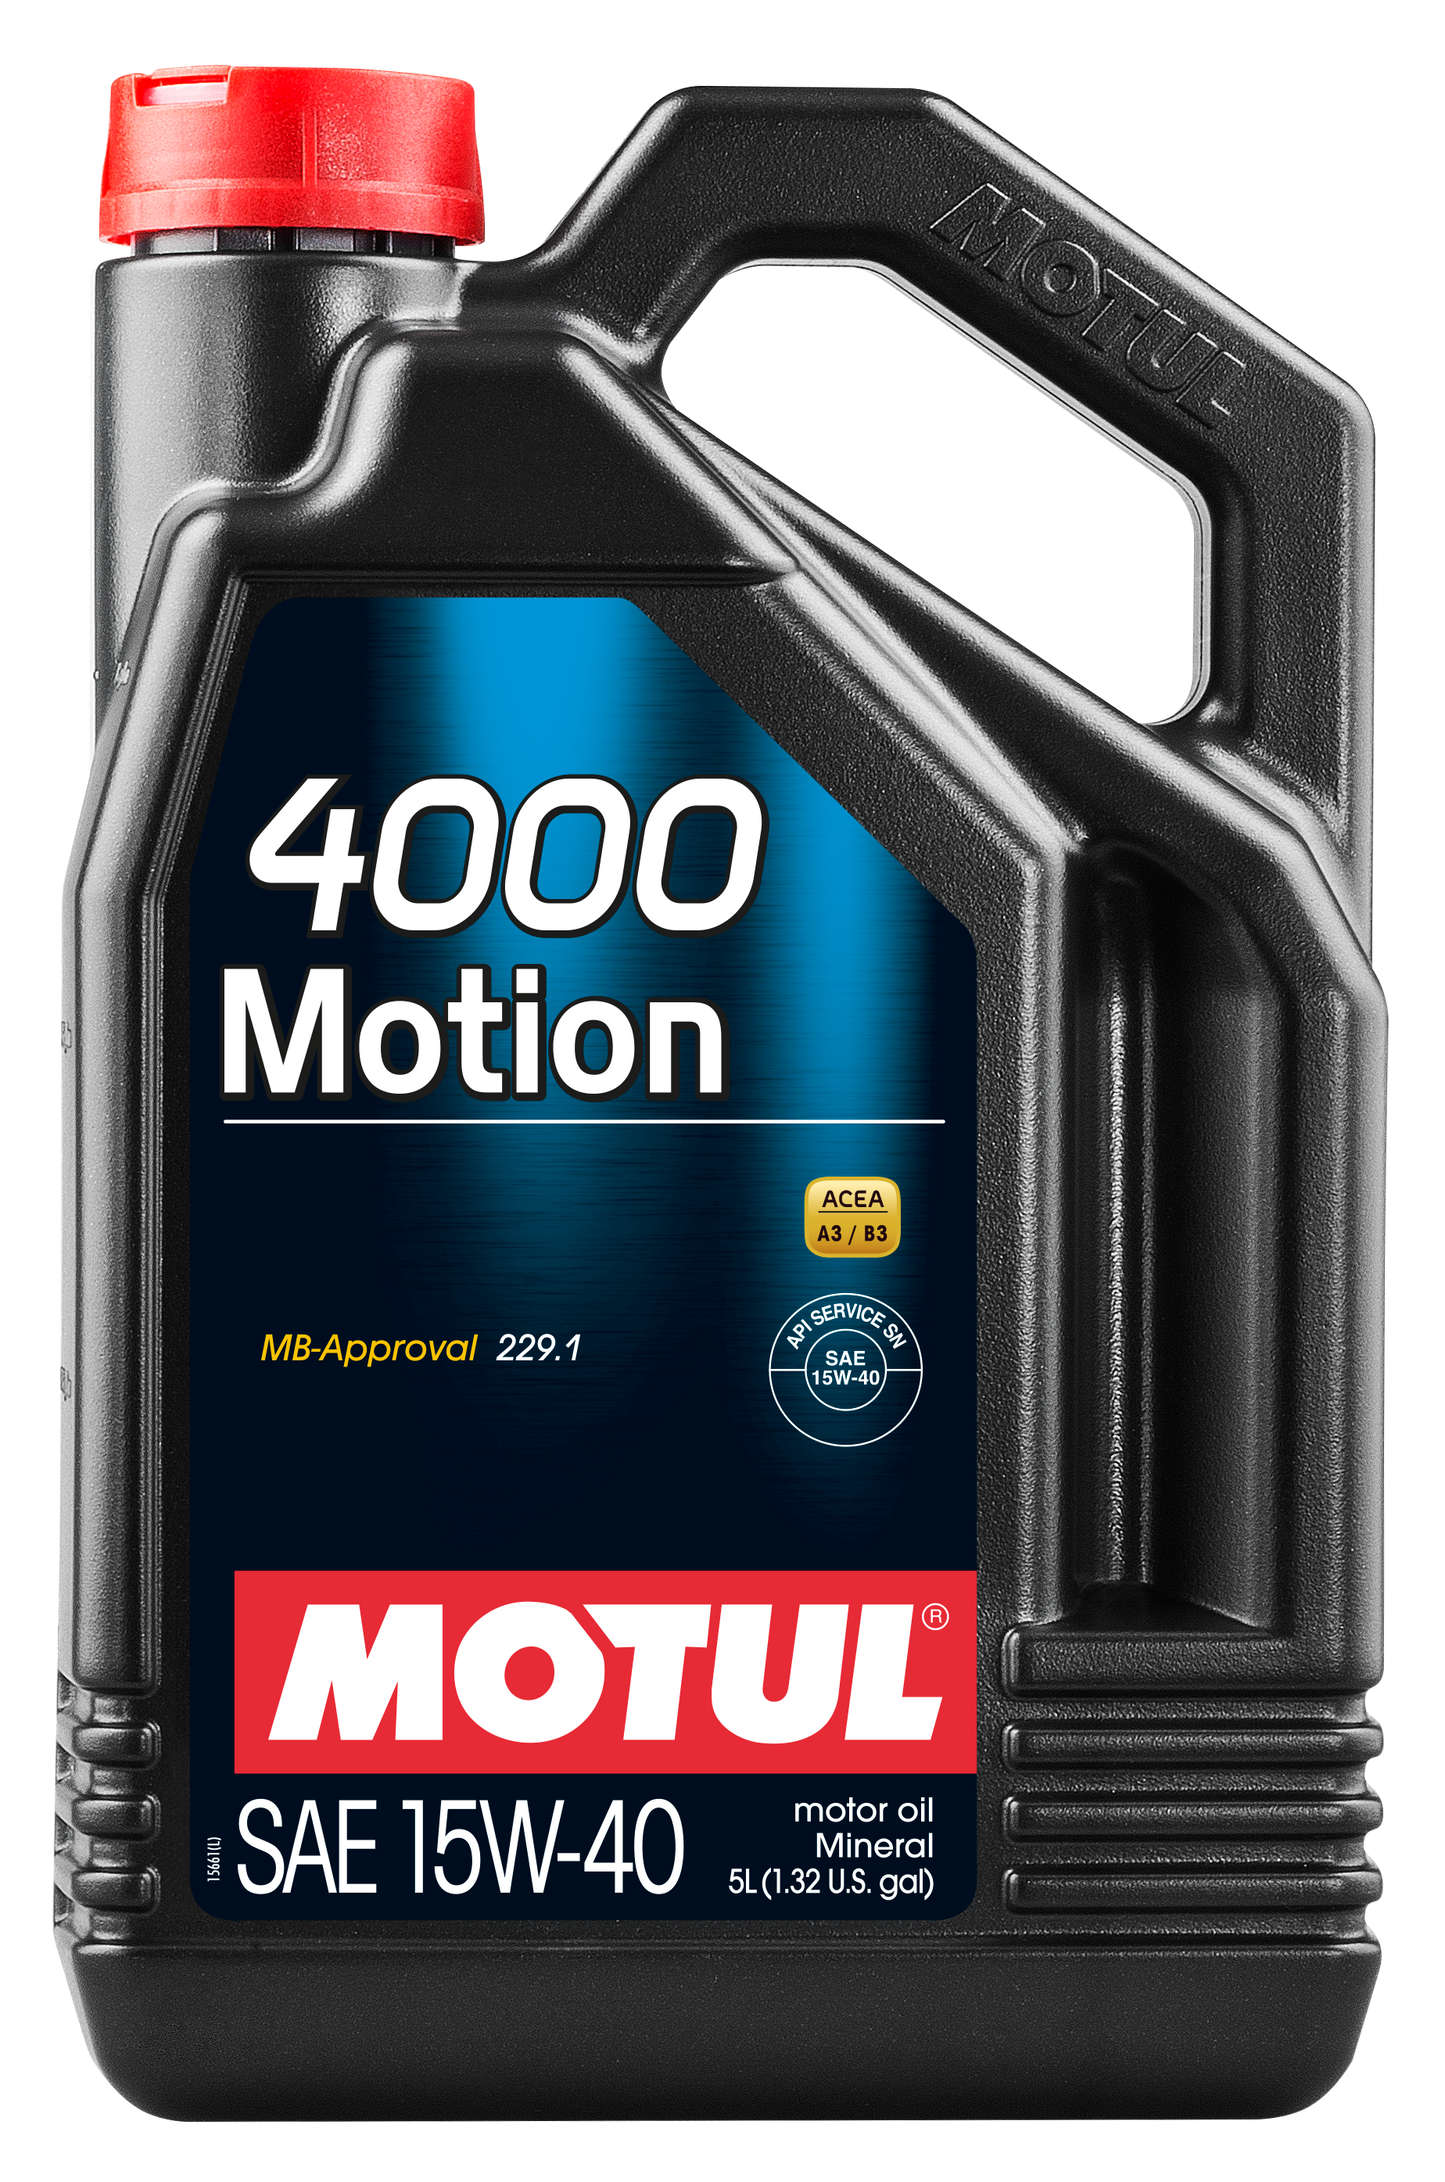 Motul 4000 MOTION 15W-40, 5 liter